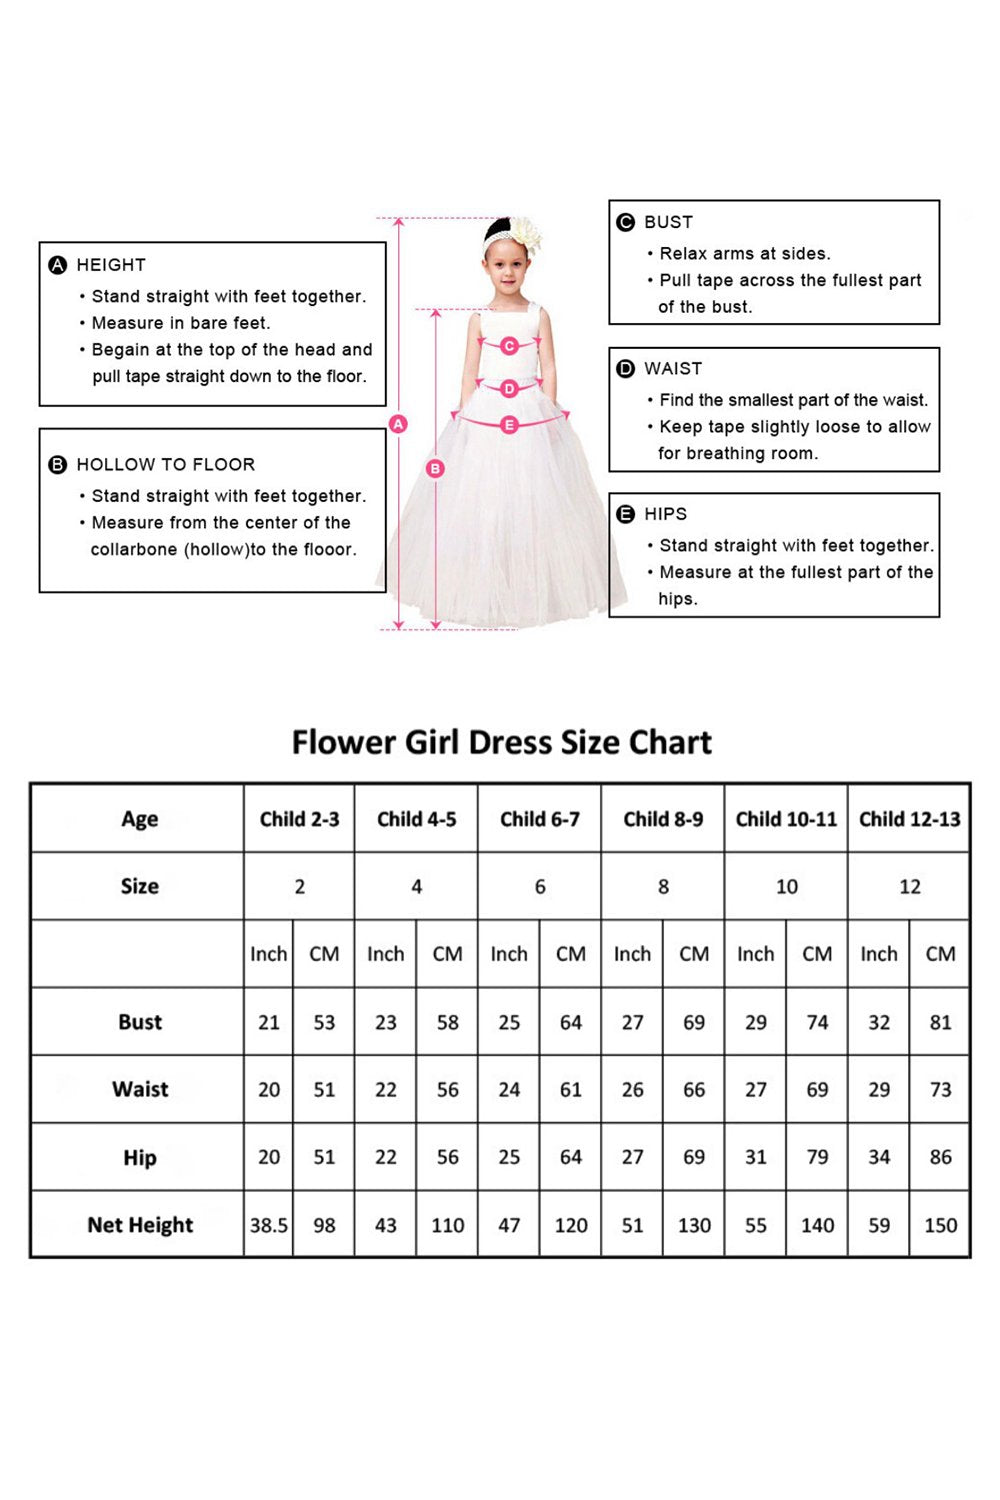 A-Line Floor Length Tulle Lace Flower Girl Dress CF0305